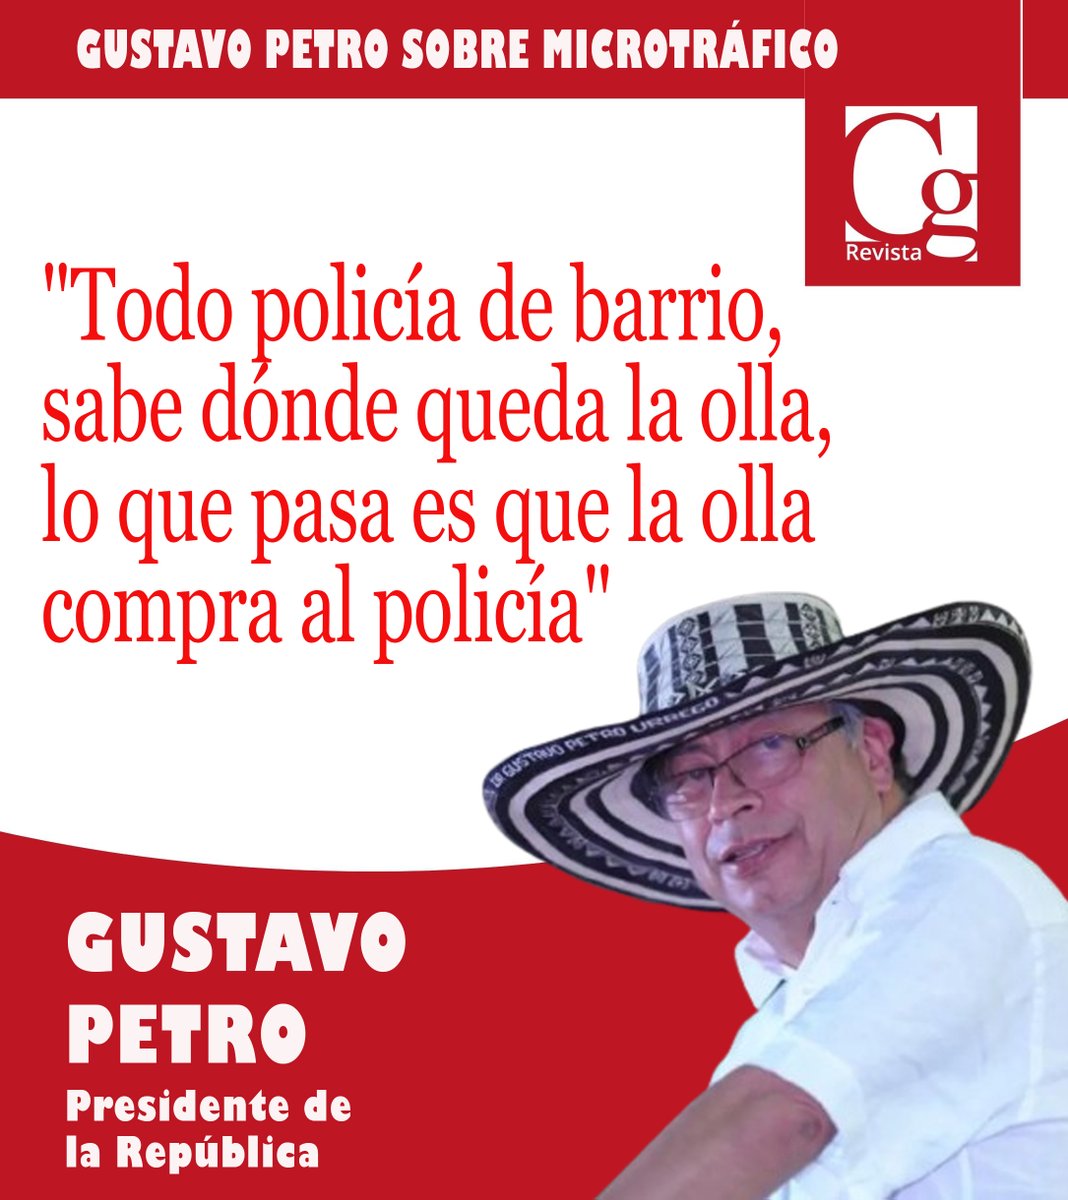 #Frase #GustavoPetro sobre #Microtráfico, #PolicíaNacional #presidenciadelarepublica